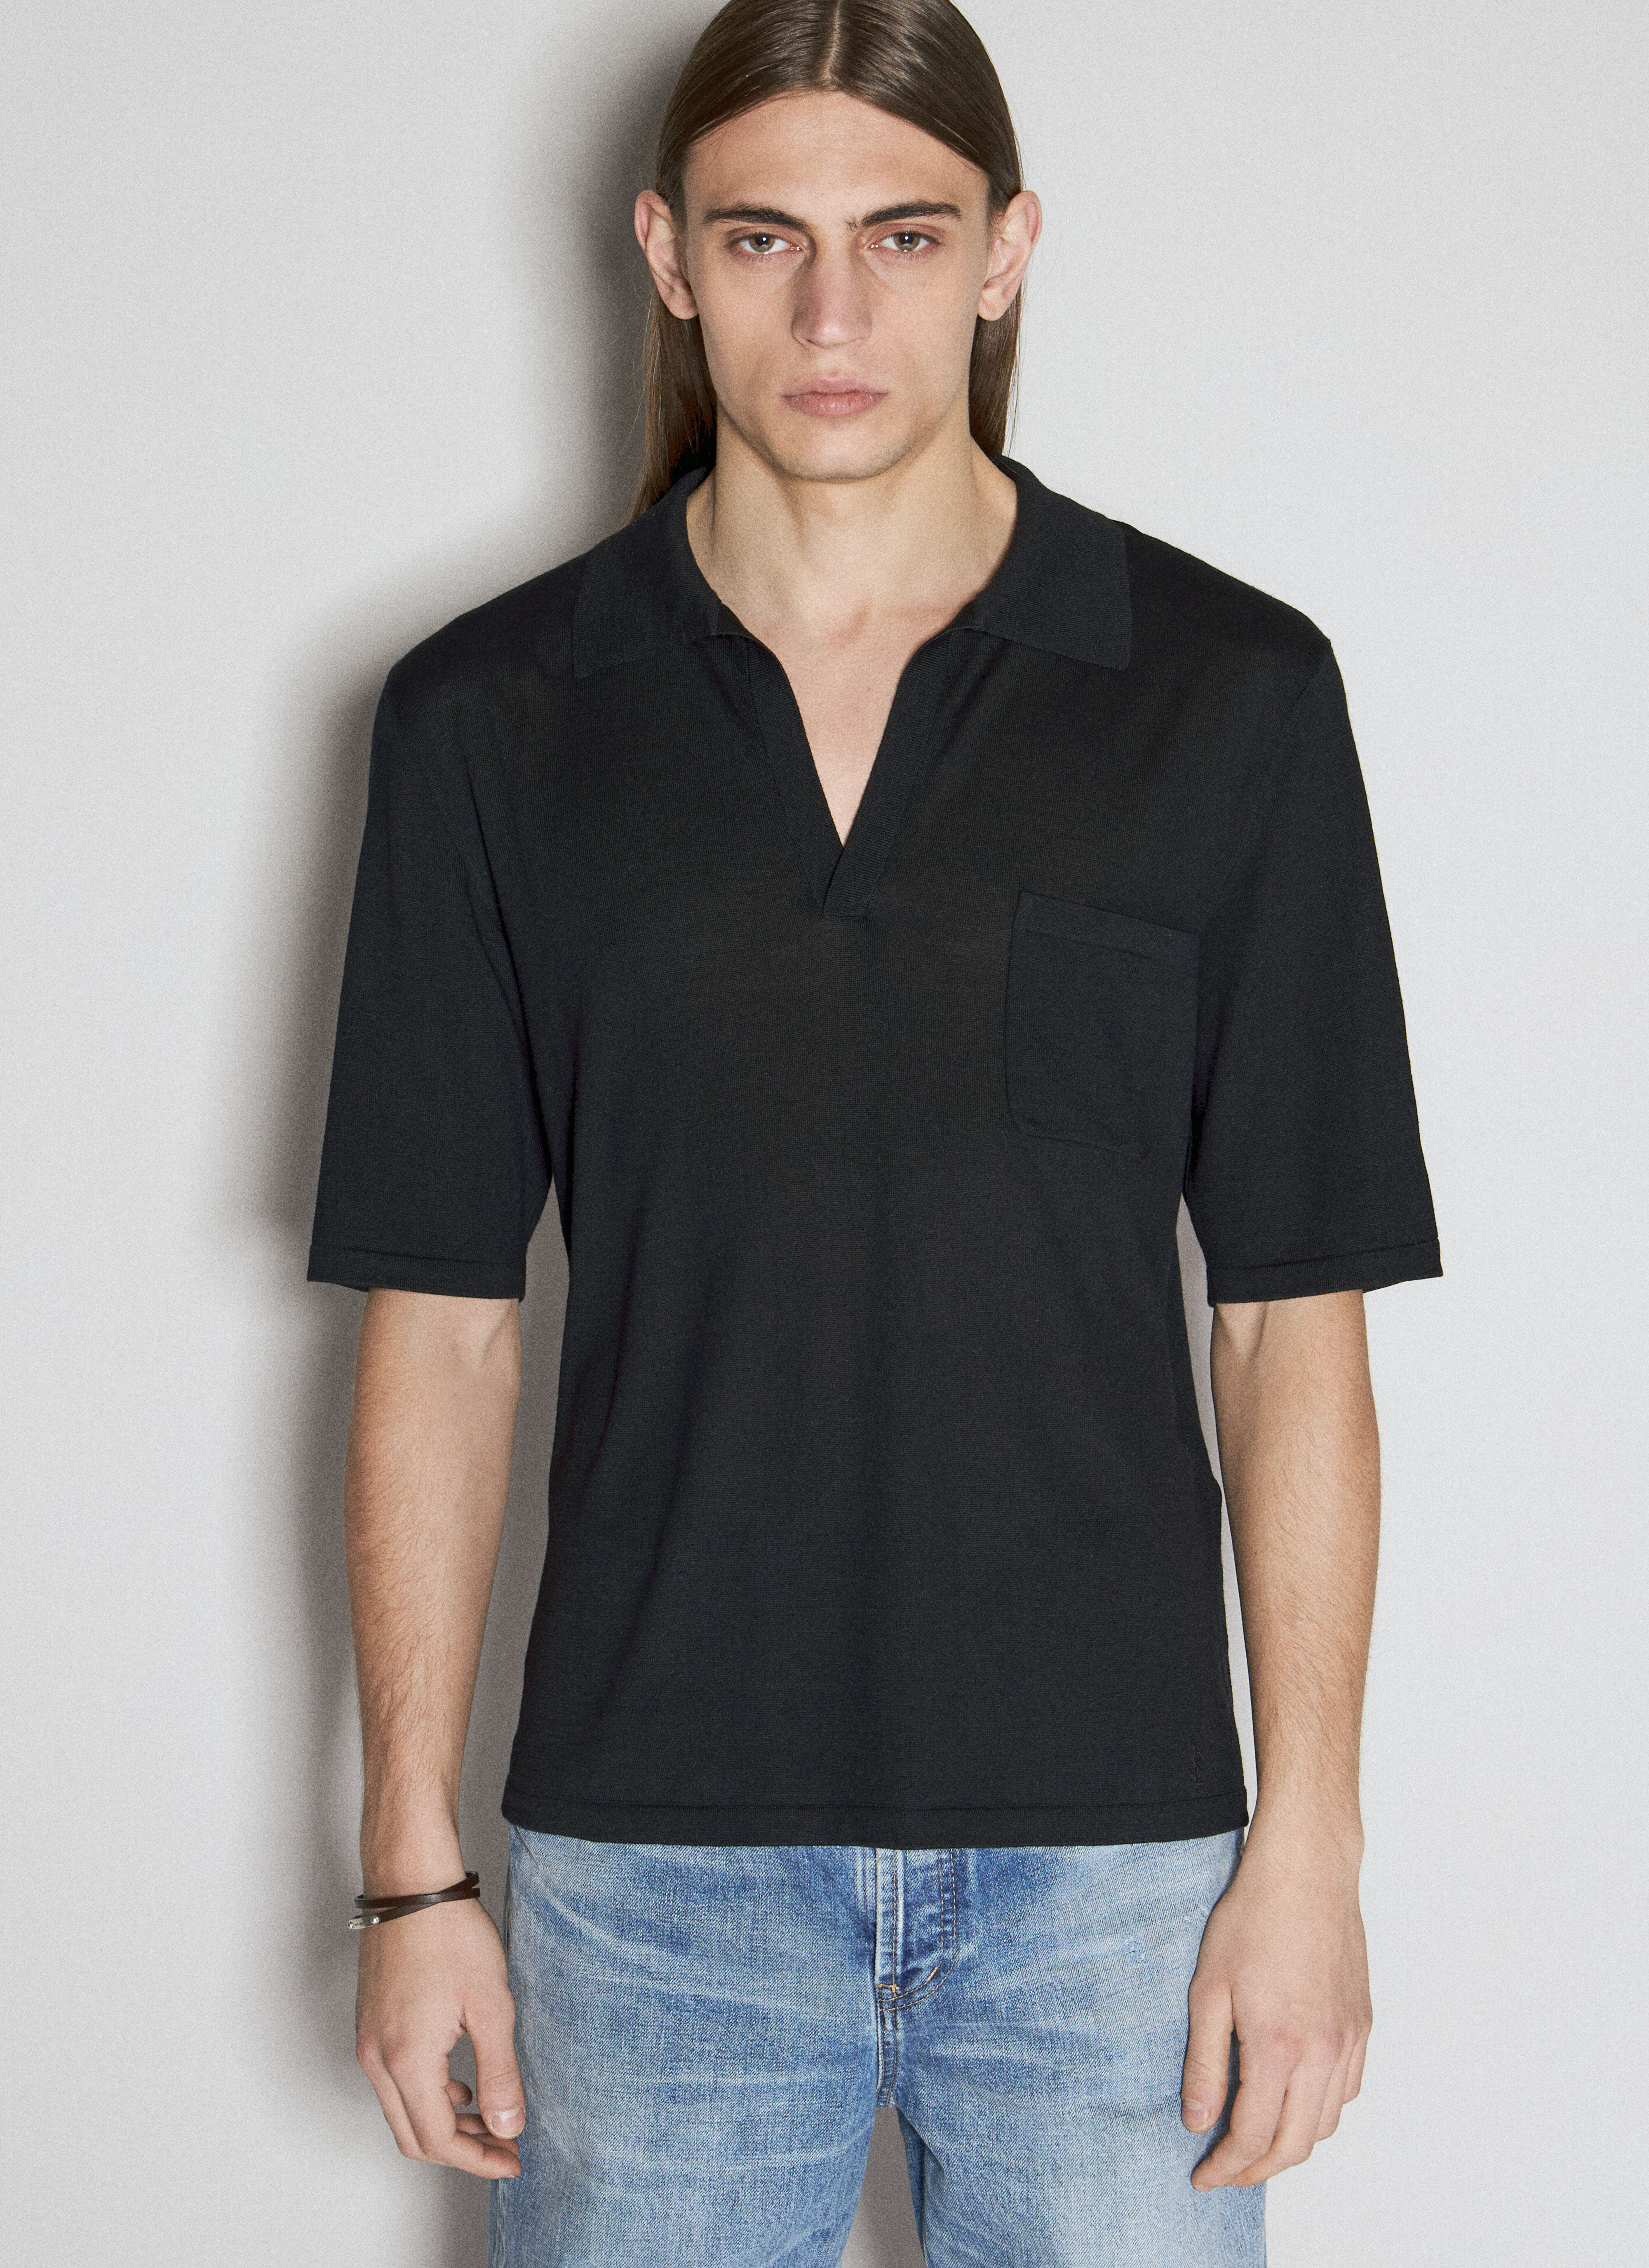 Saint Laurent Wool Knit Polo Shirt Black sla0156019